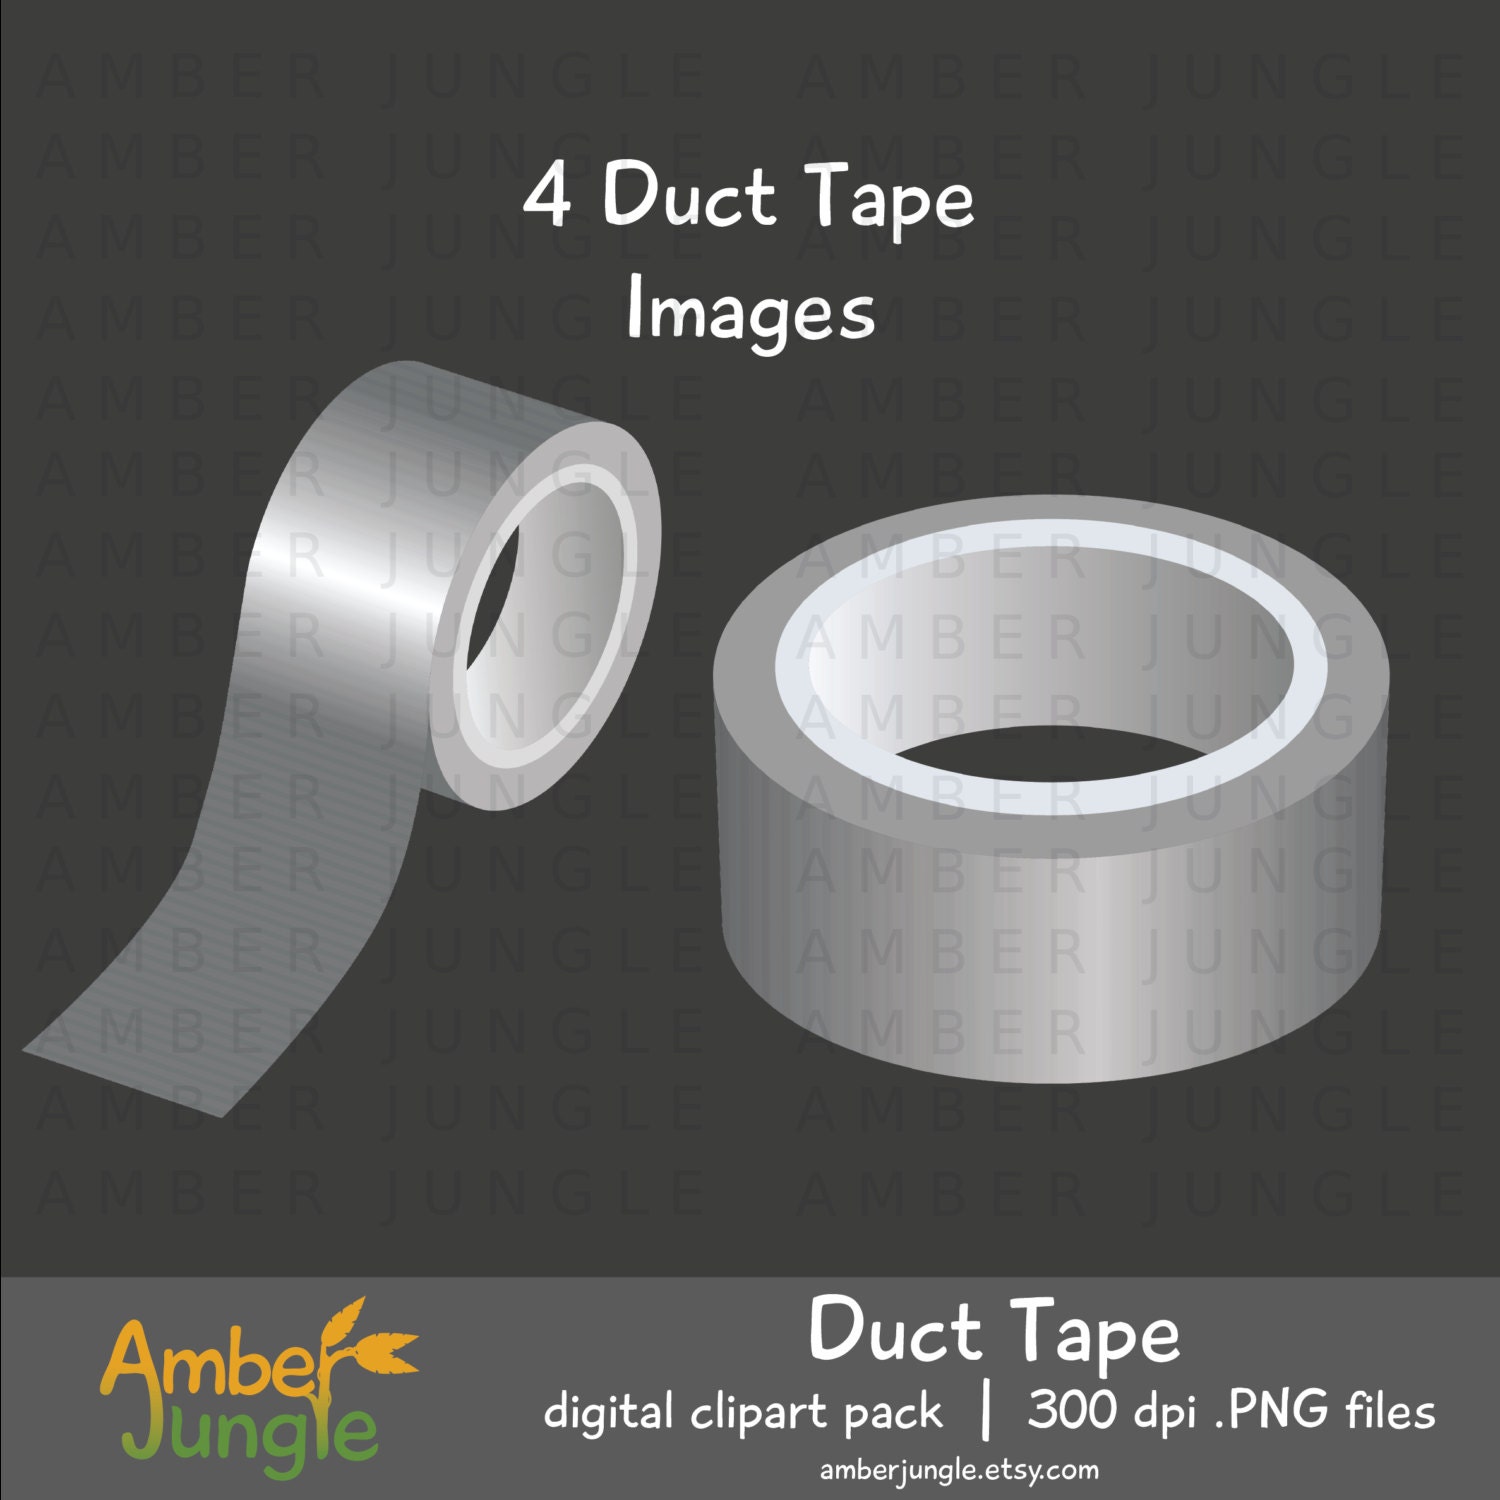 Washi Tape Clipart, Masking Tape Clipart, Digital Washi Tape for  Scrapbooking, Journaling, Sticker Planner Png, School Planner Sticker 